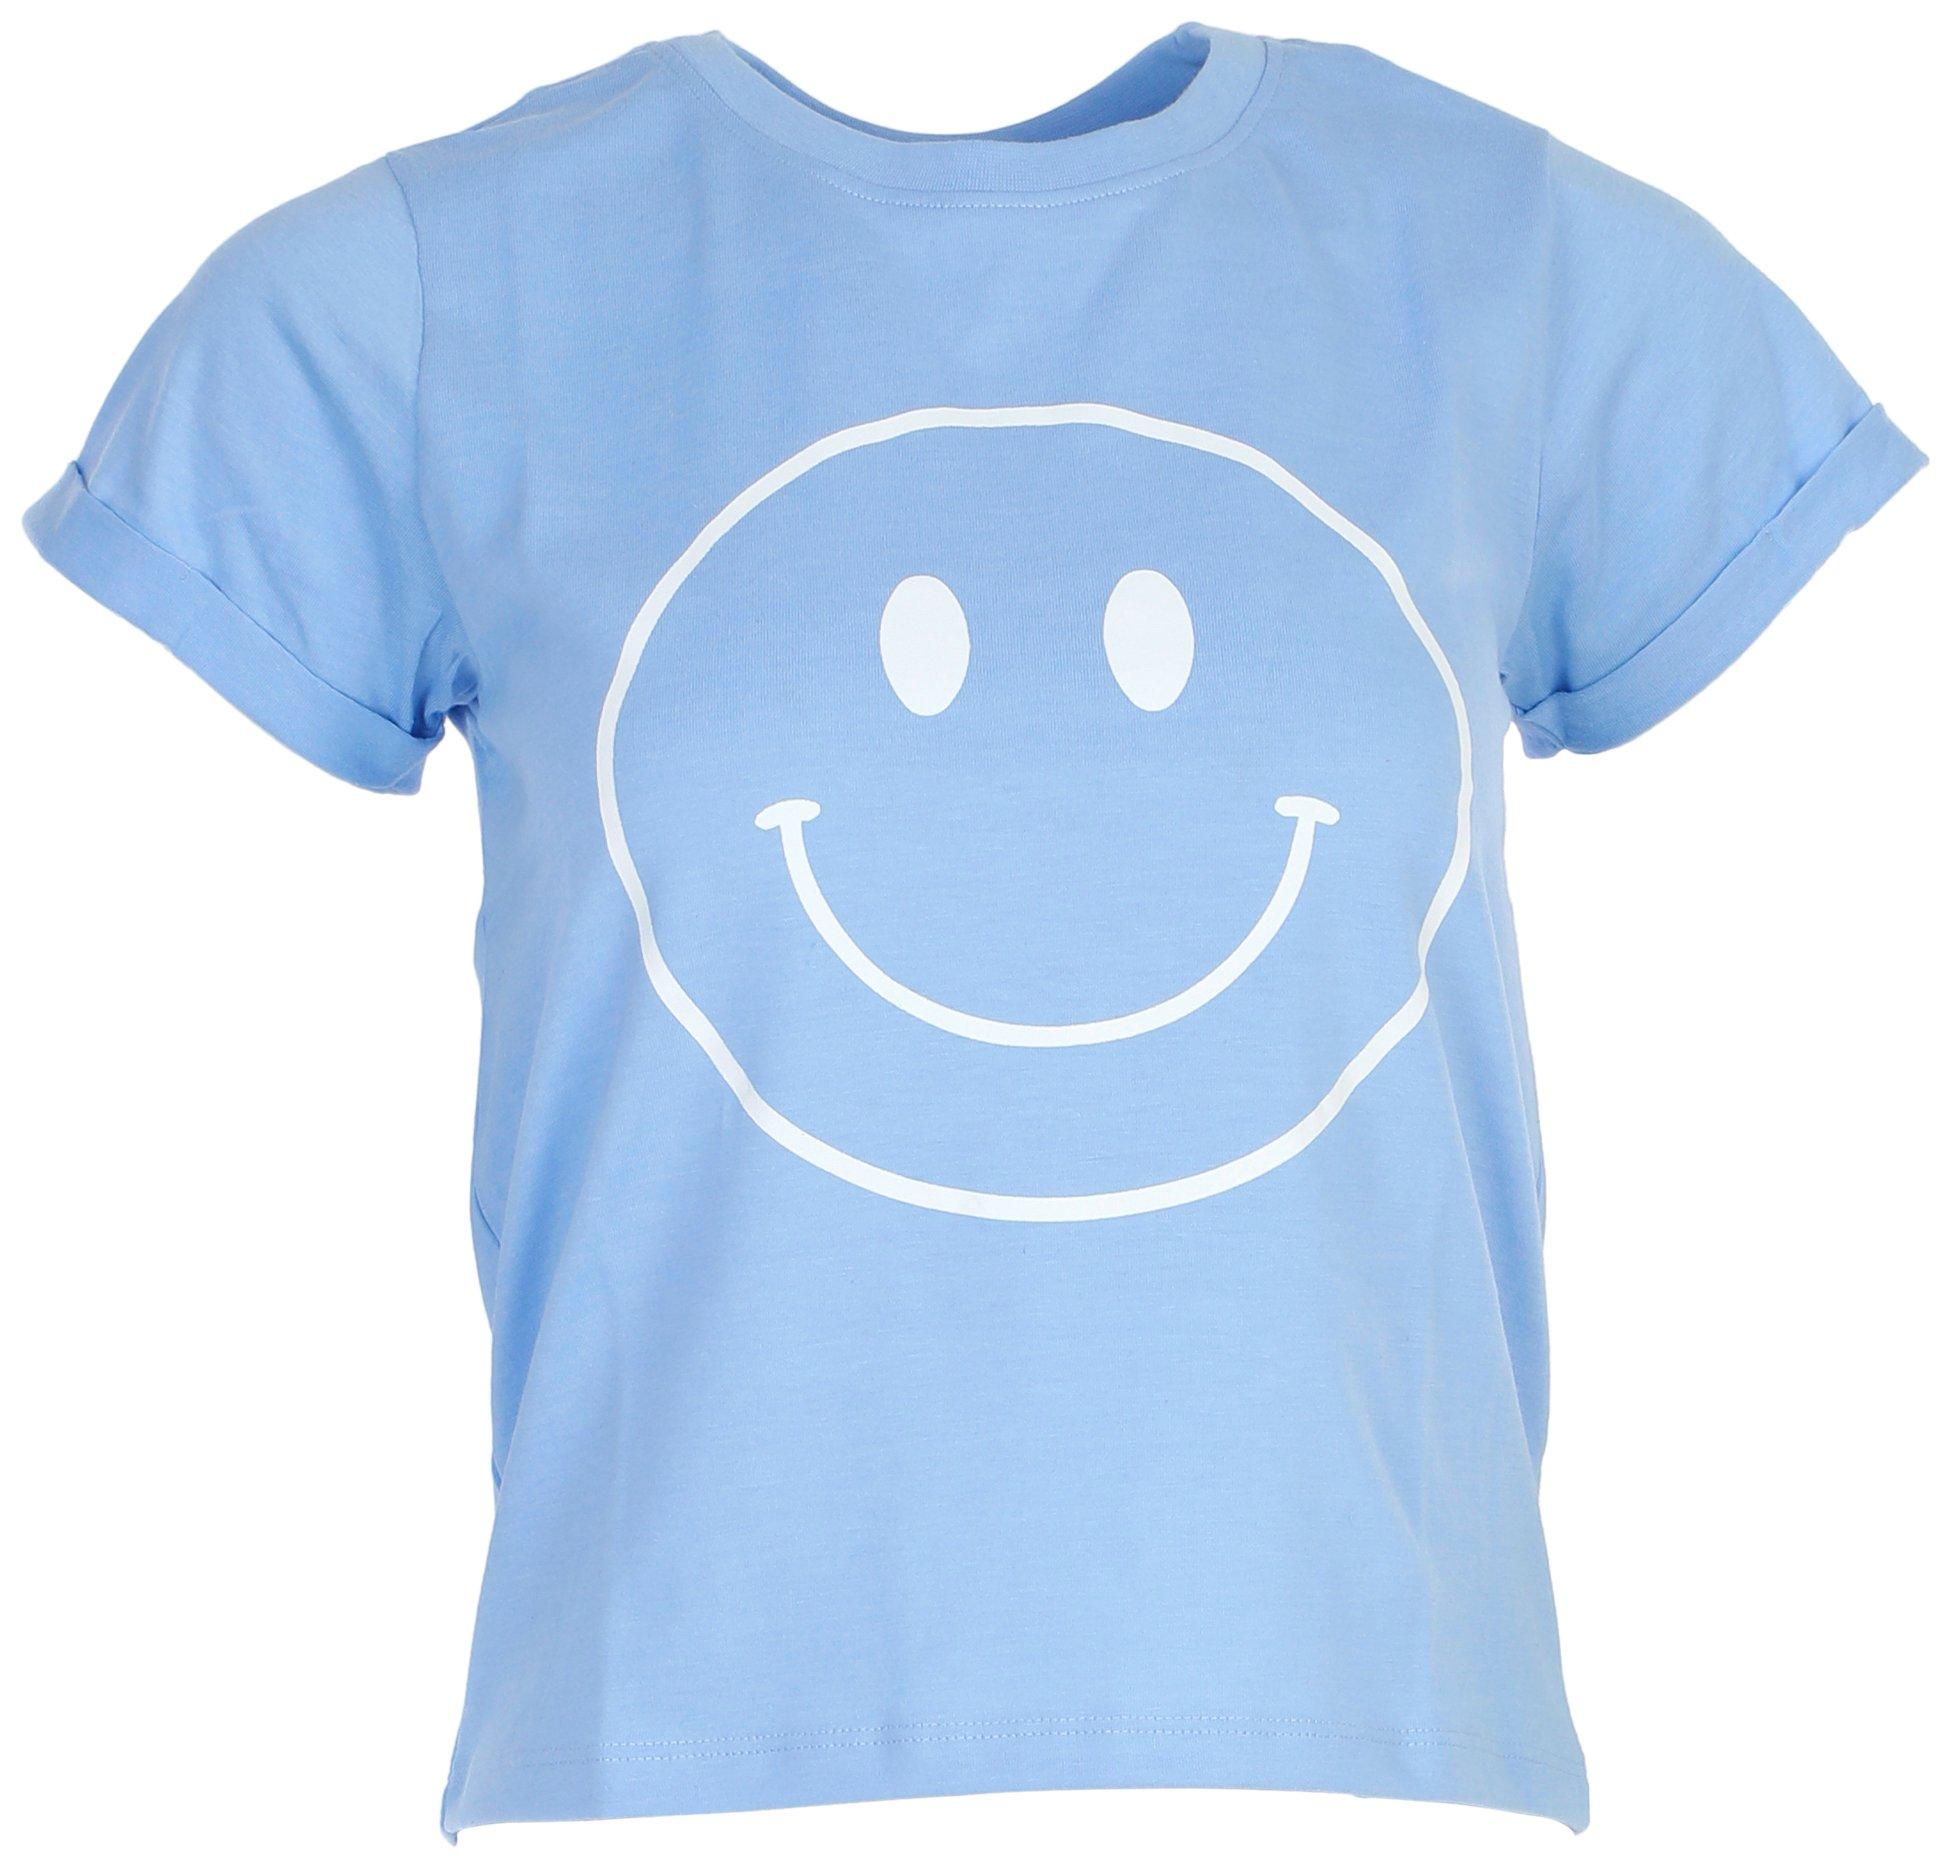 Juniors Smiley Face T-shirt